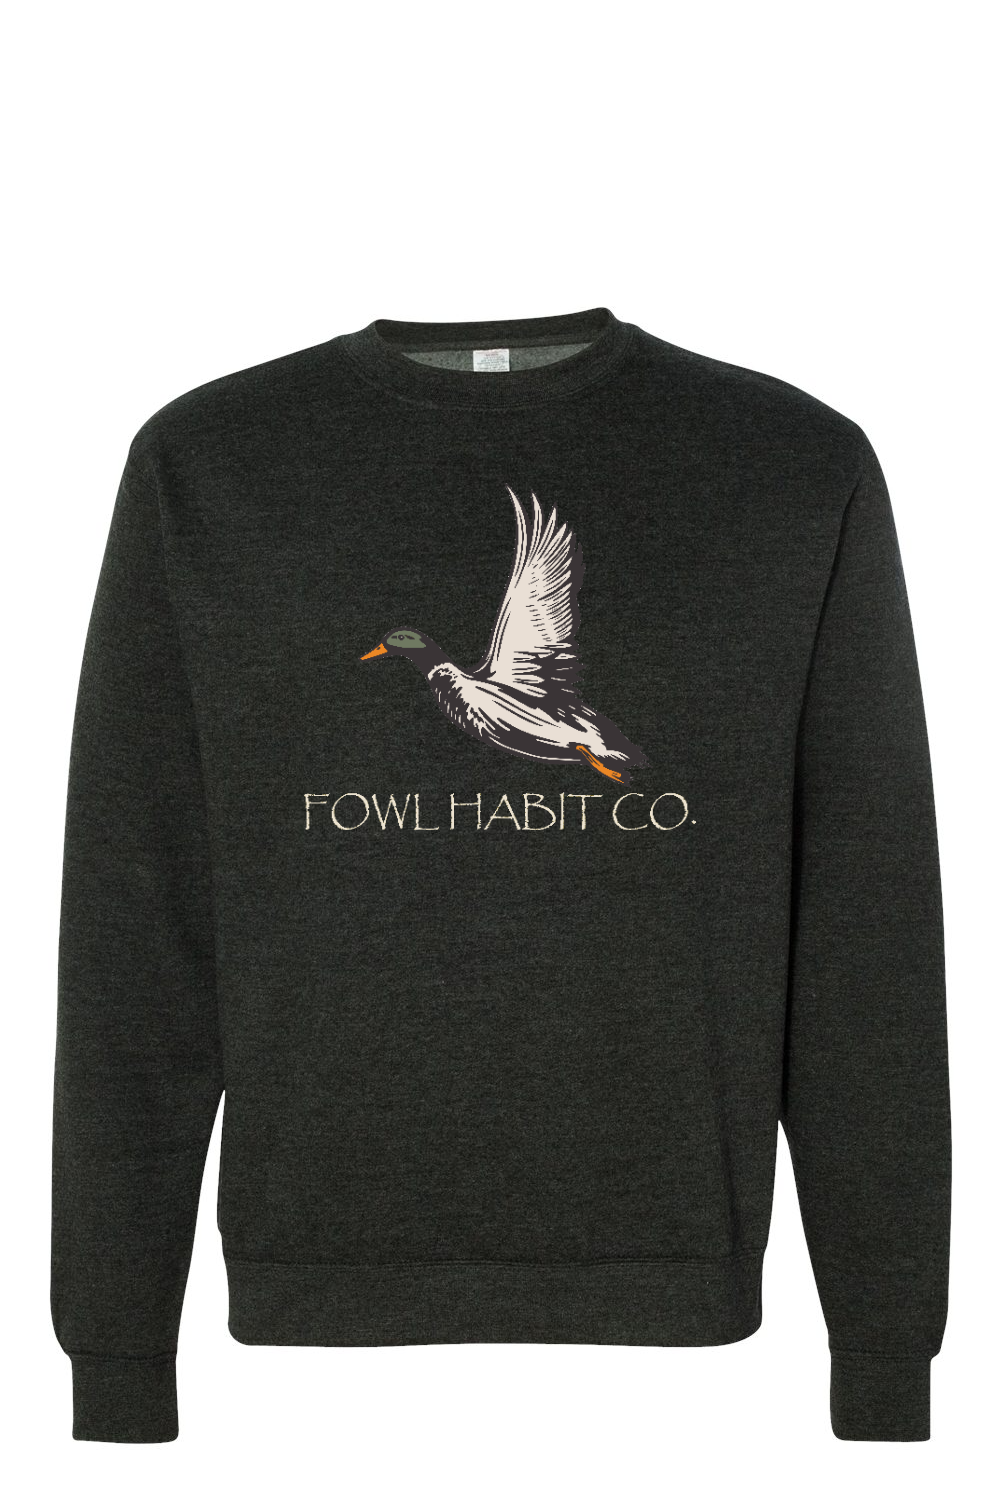 The Vintage Mallard Sweatshirt - Fowl Habit Co.